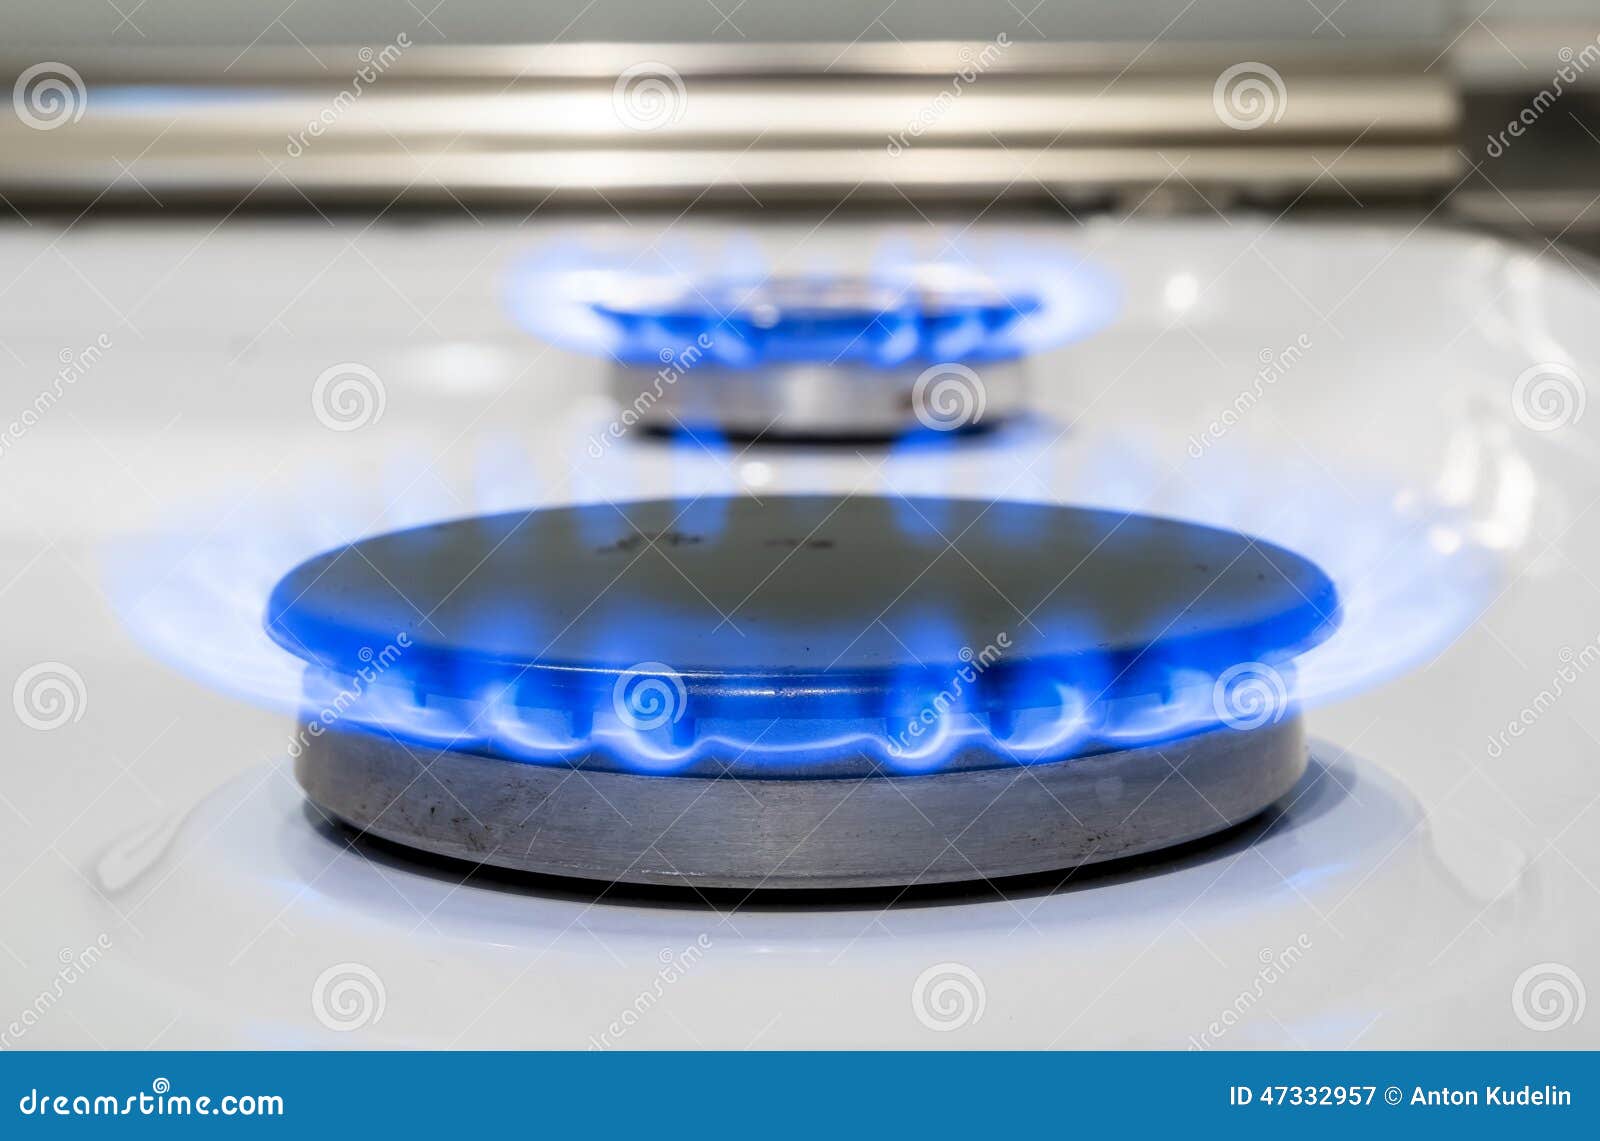 https://thumbs.dreamstime.com/z/fire-burning-gas-burner-household-gas-ovens-blue-47332957.jpg